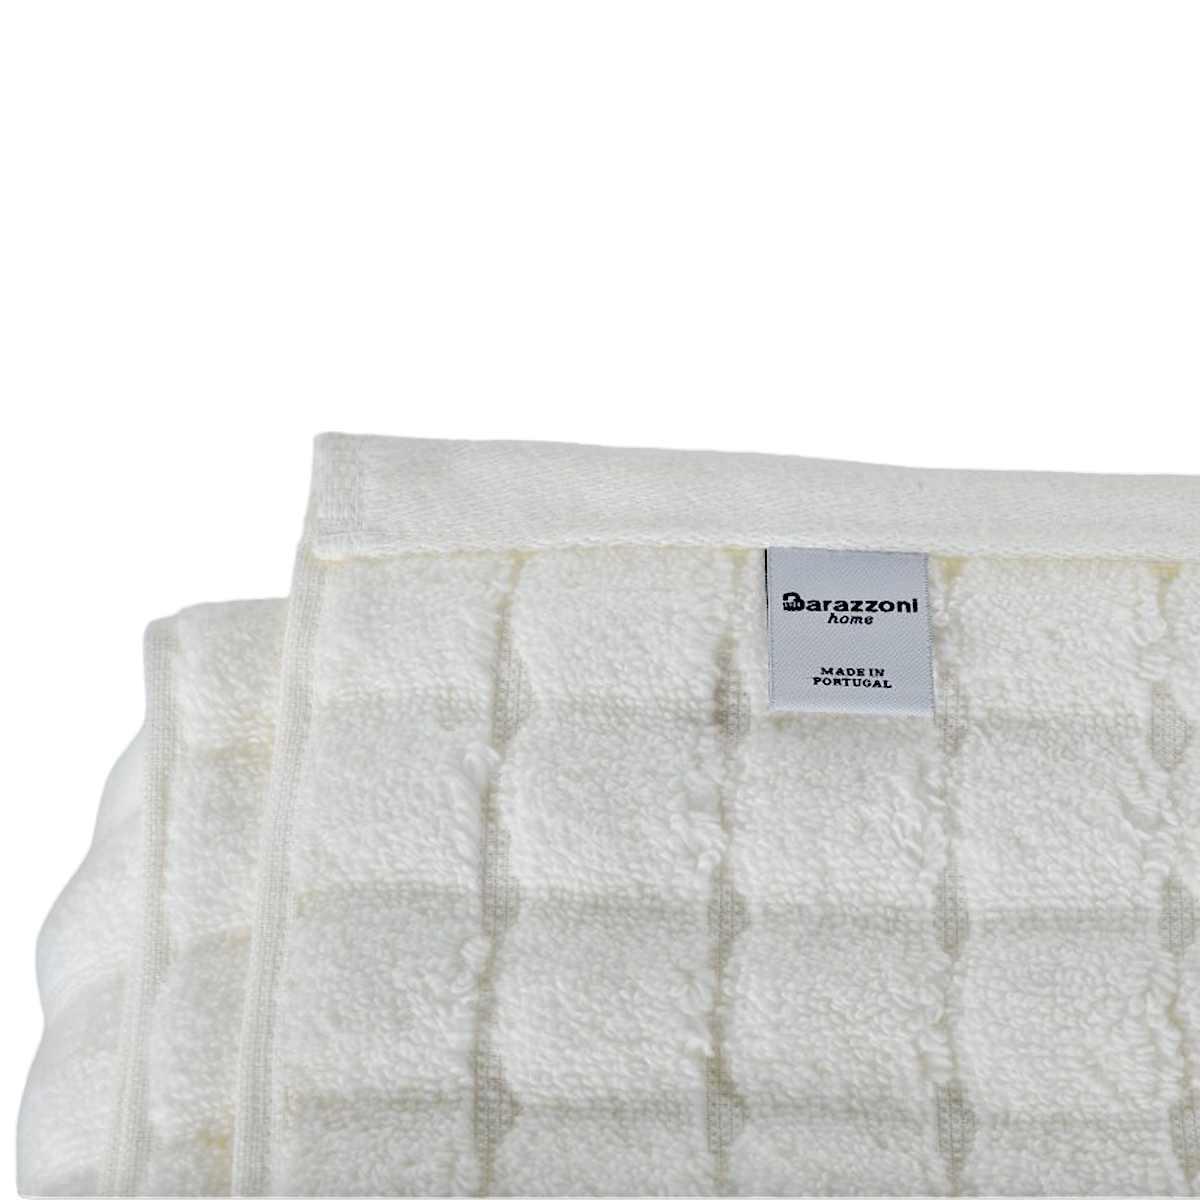 Asciugamano Barazzoni Telo Doccia Onde Bianco Panna cm.90x150